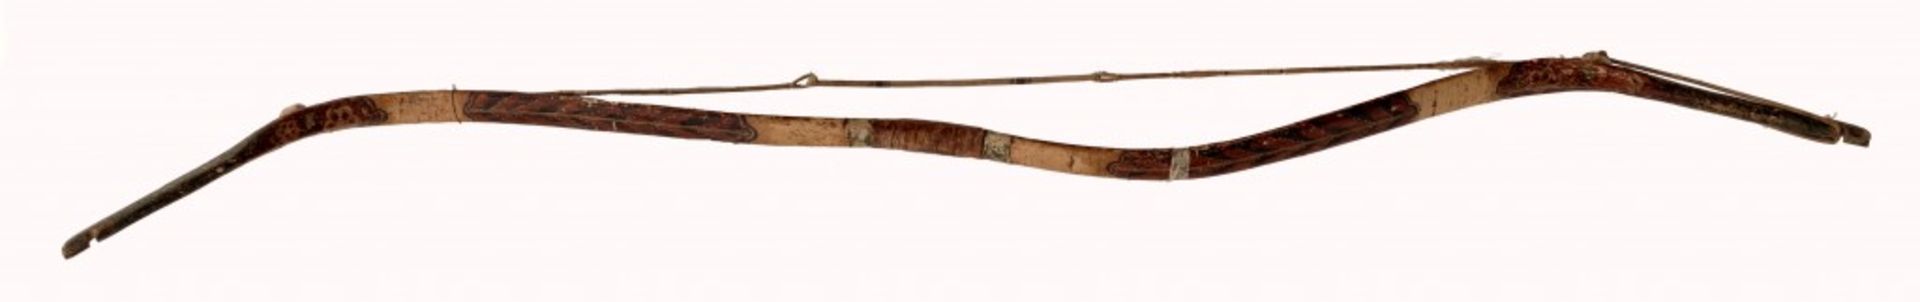 A Large Ottoman Reflex Bow